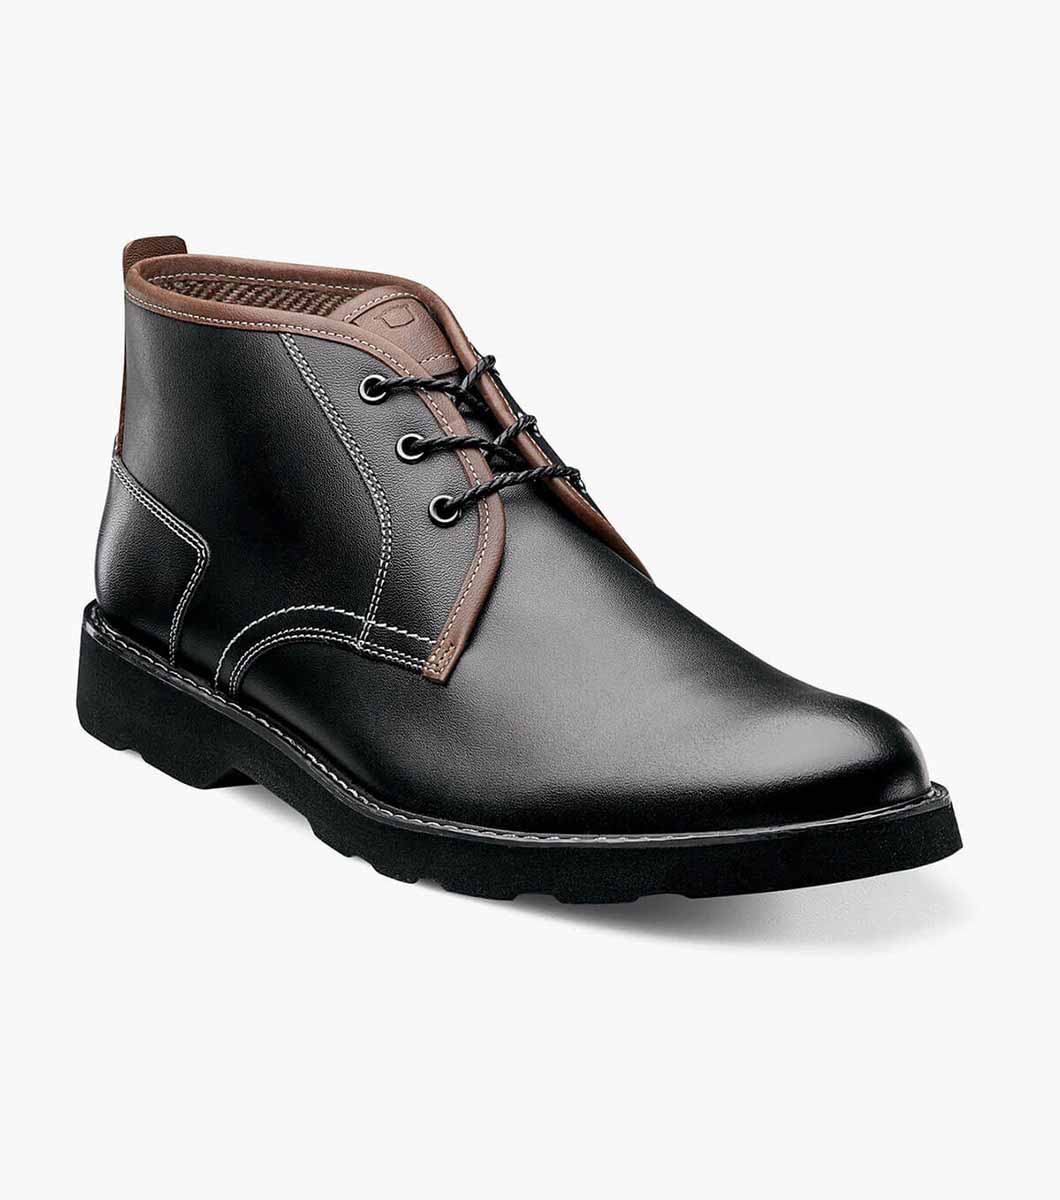 safety toe chukka boots